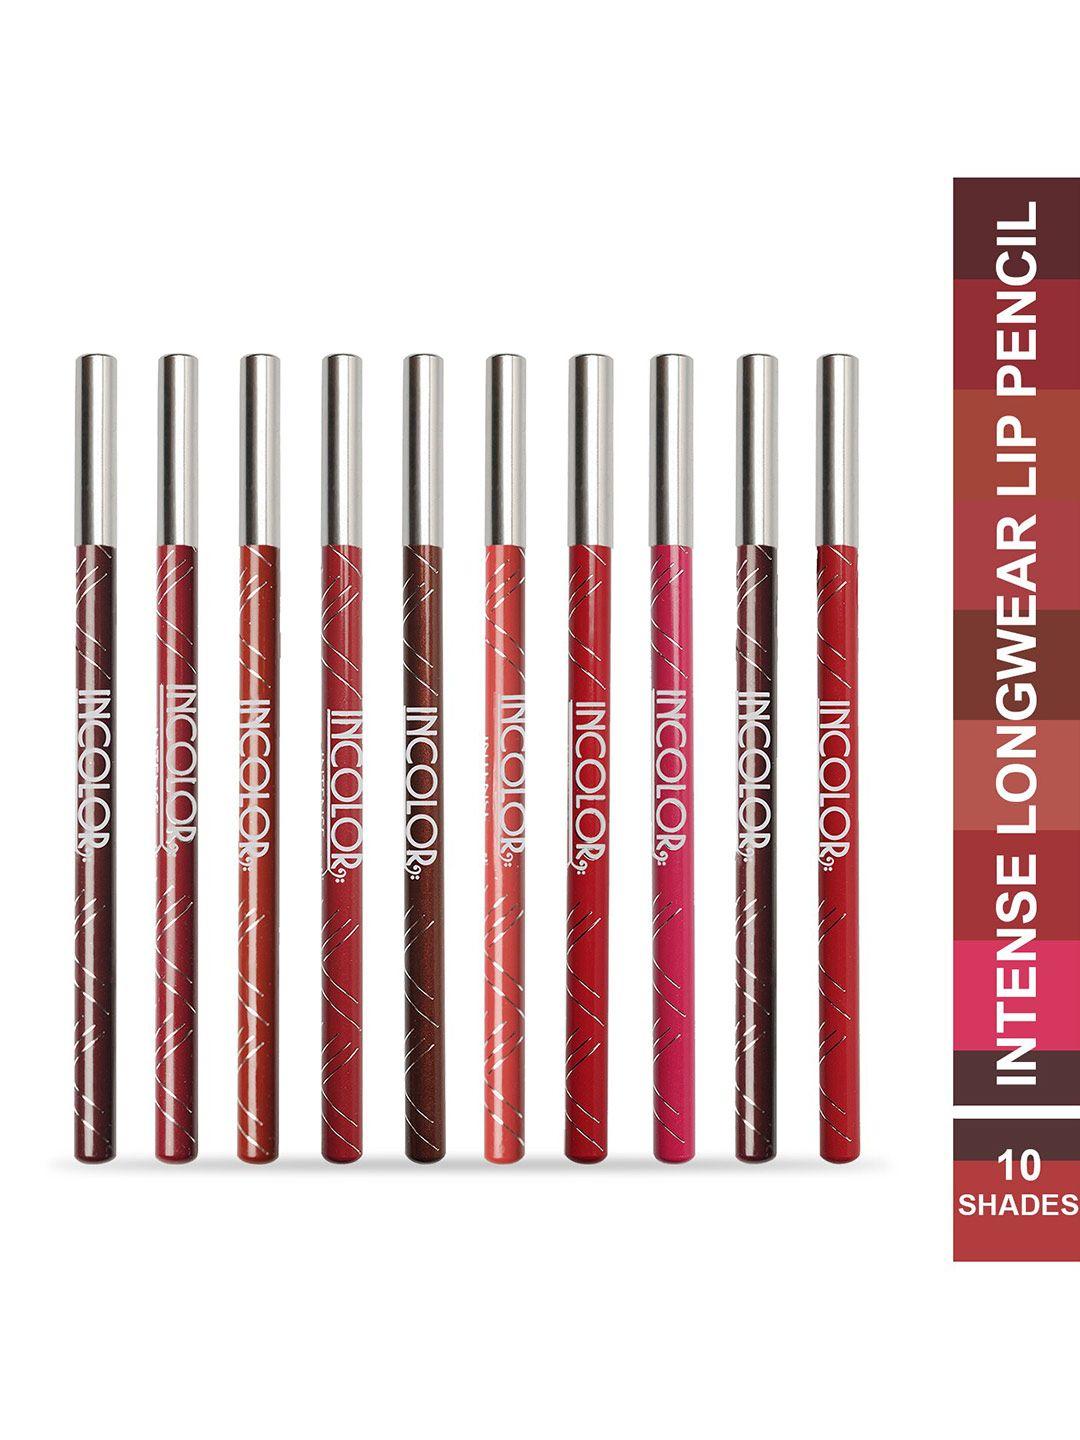 incolor set of 10 intense longwear lip pencil - 1.8g each